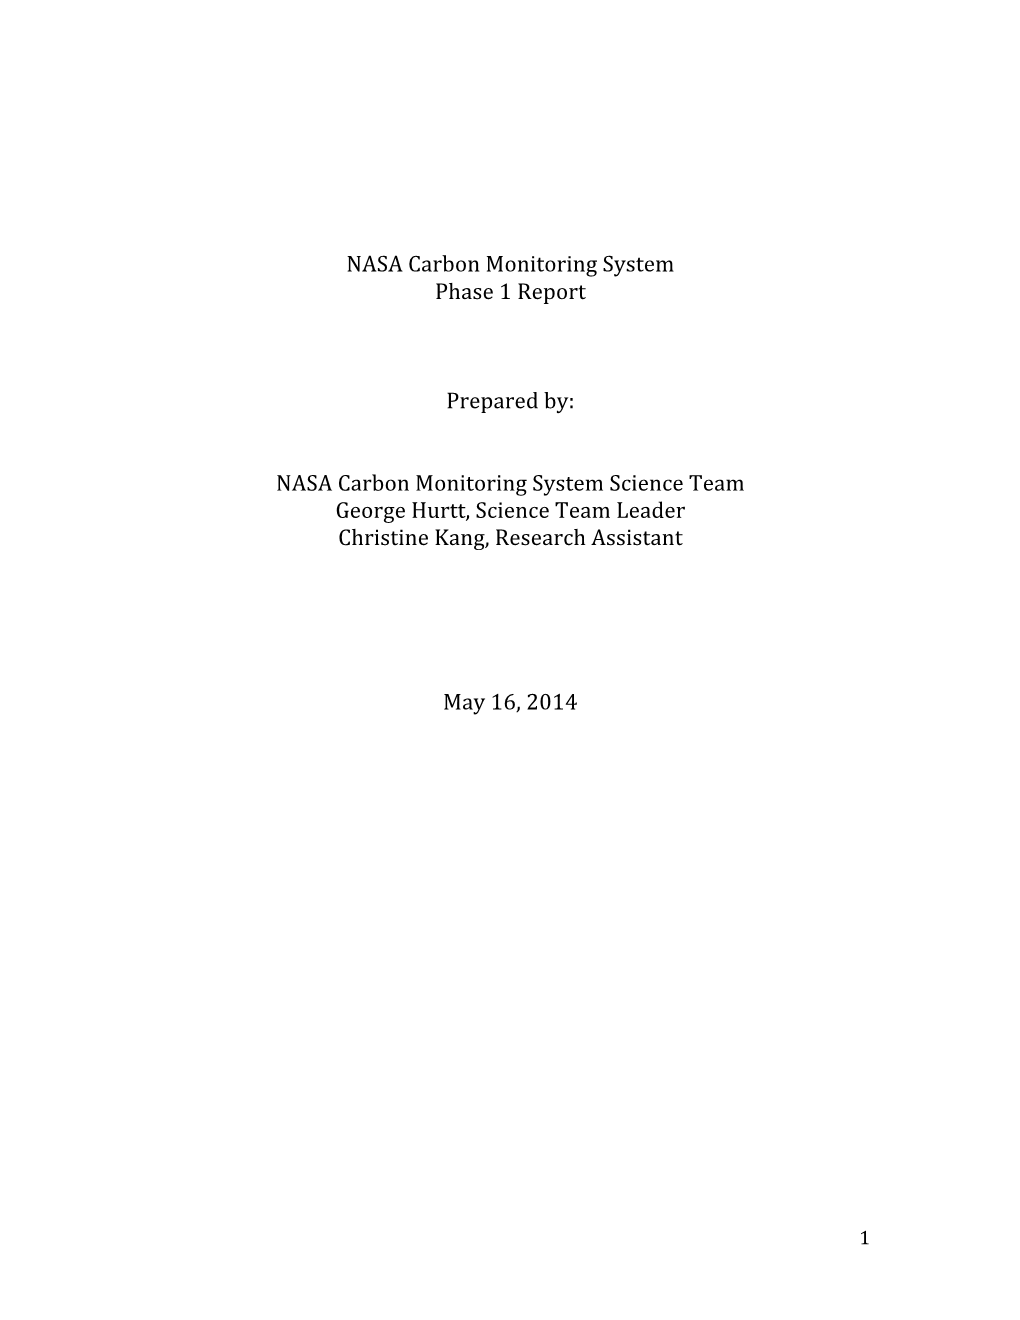 NASA Carbon Monitoring System Phase 1 Report Prepared By: NASA Carbon Monitoring